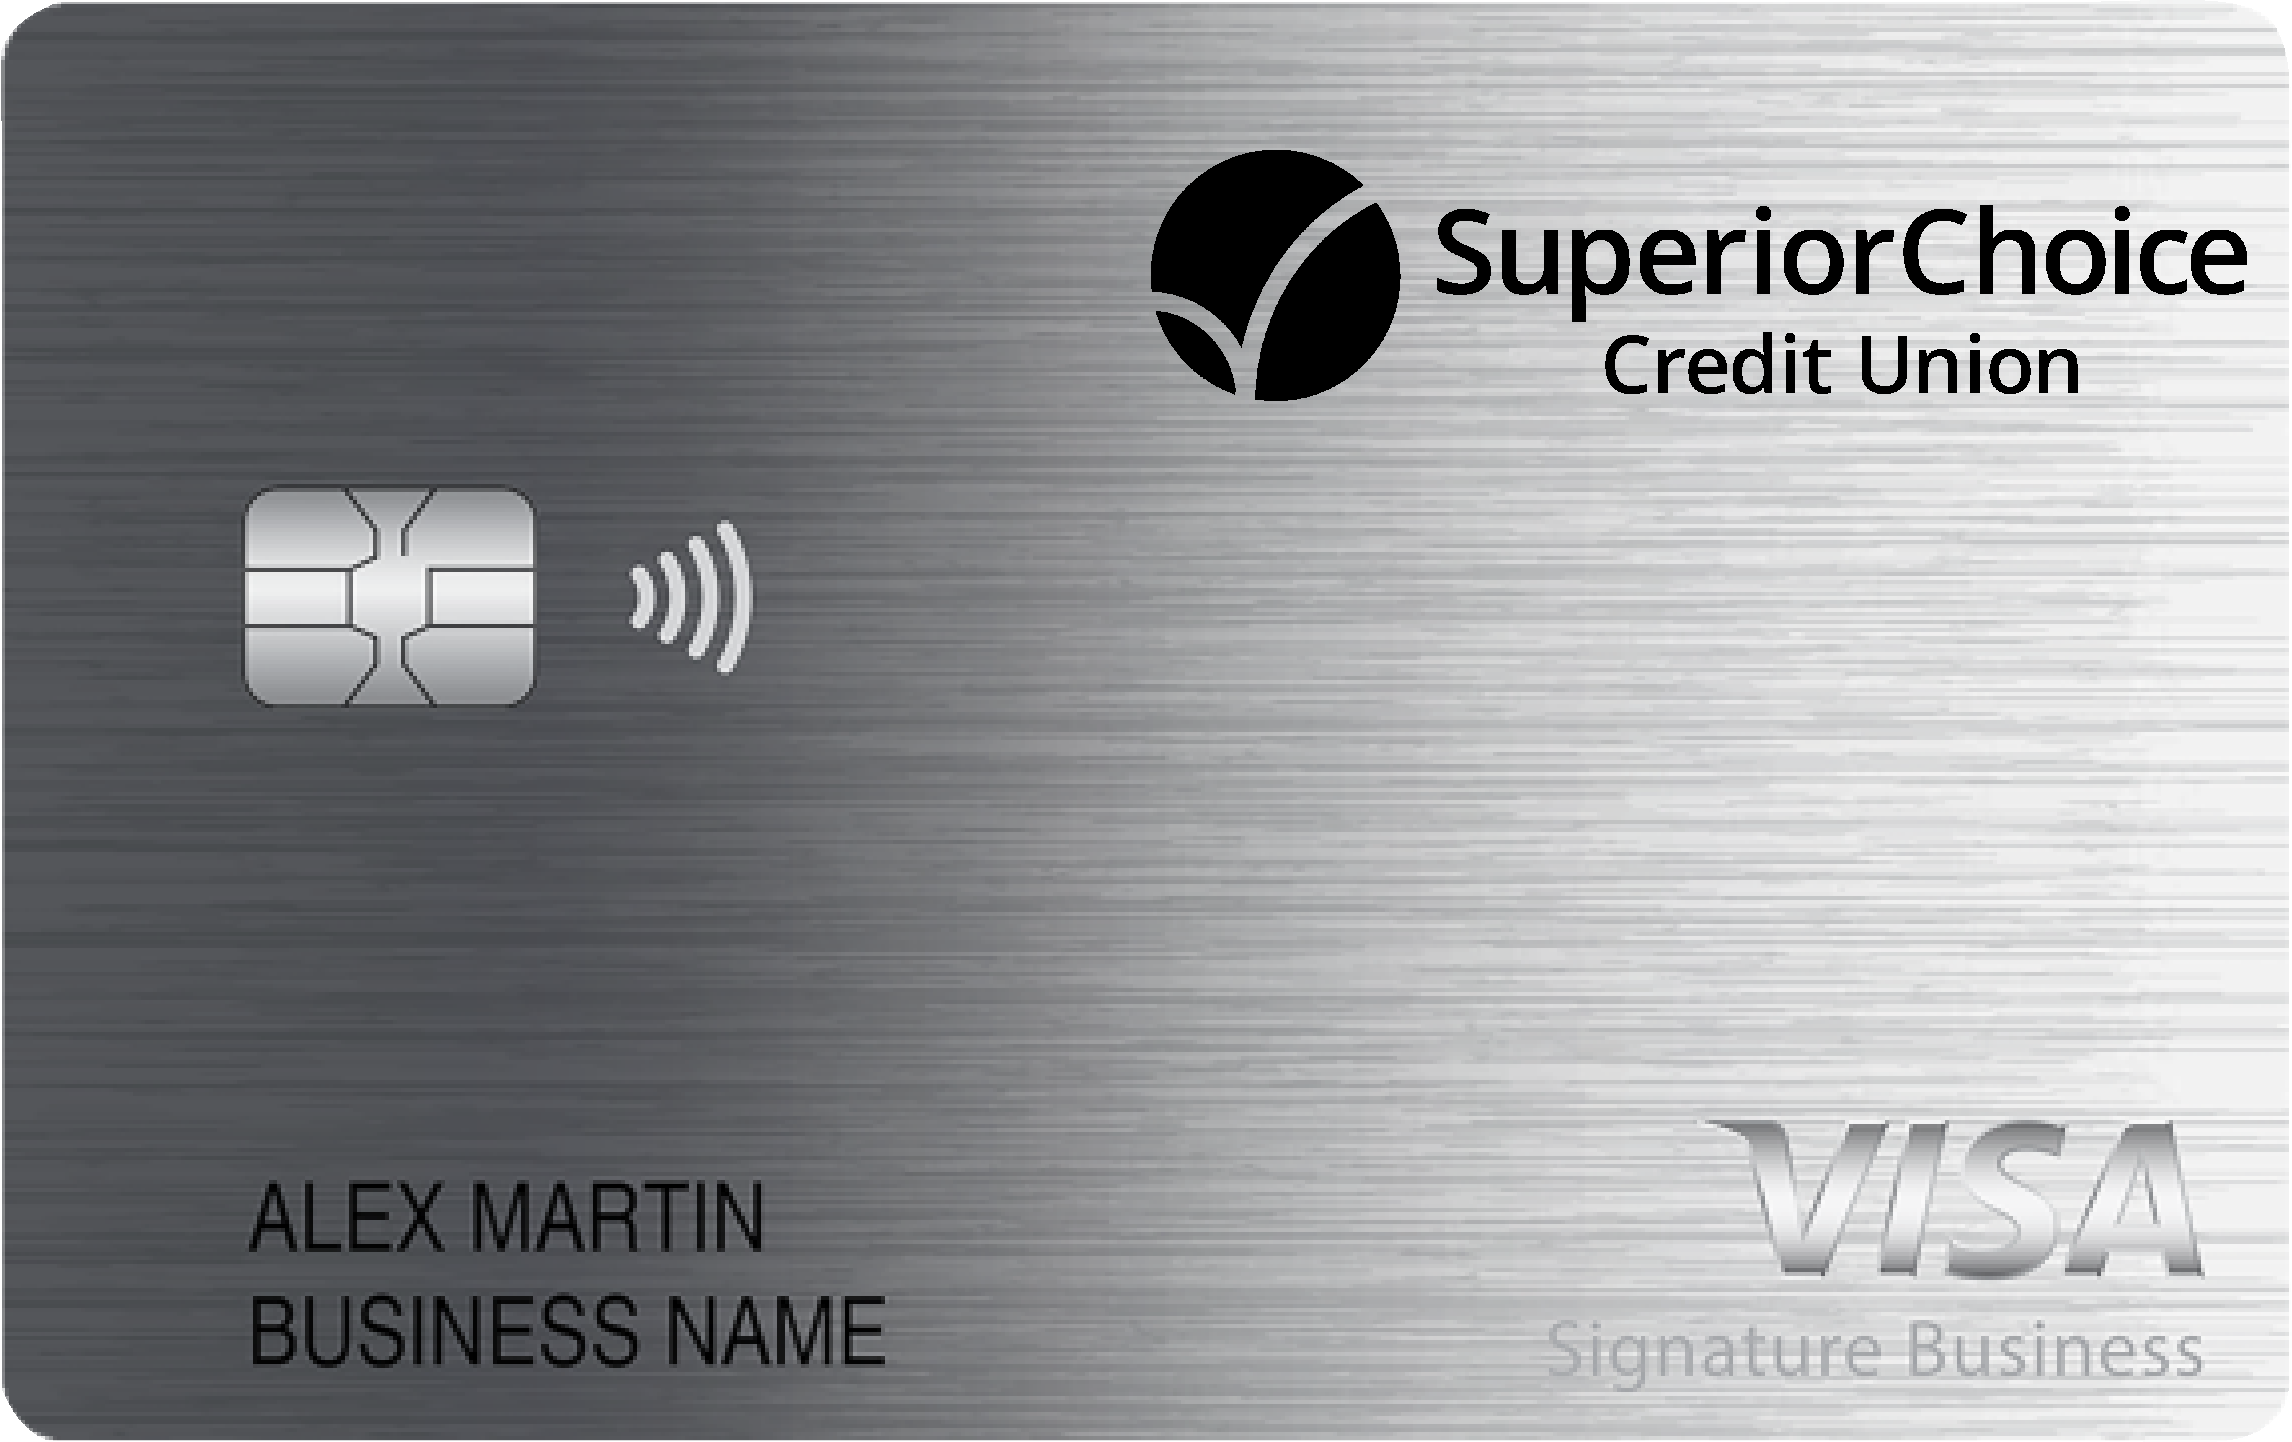 Superior Choice Credit Union Smart Business Rewards Card